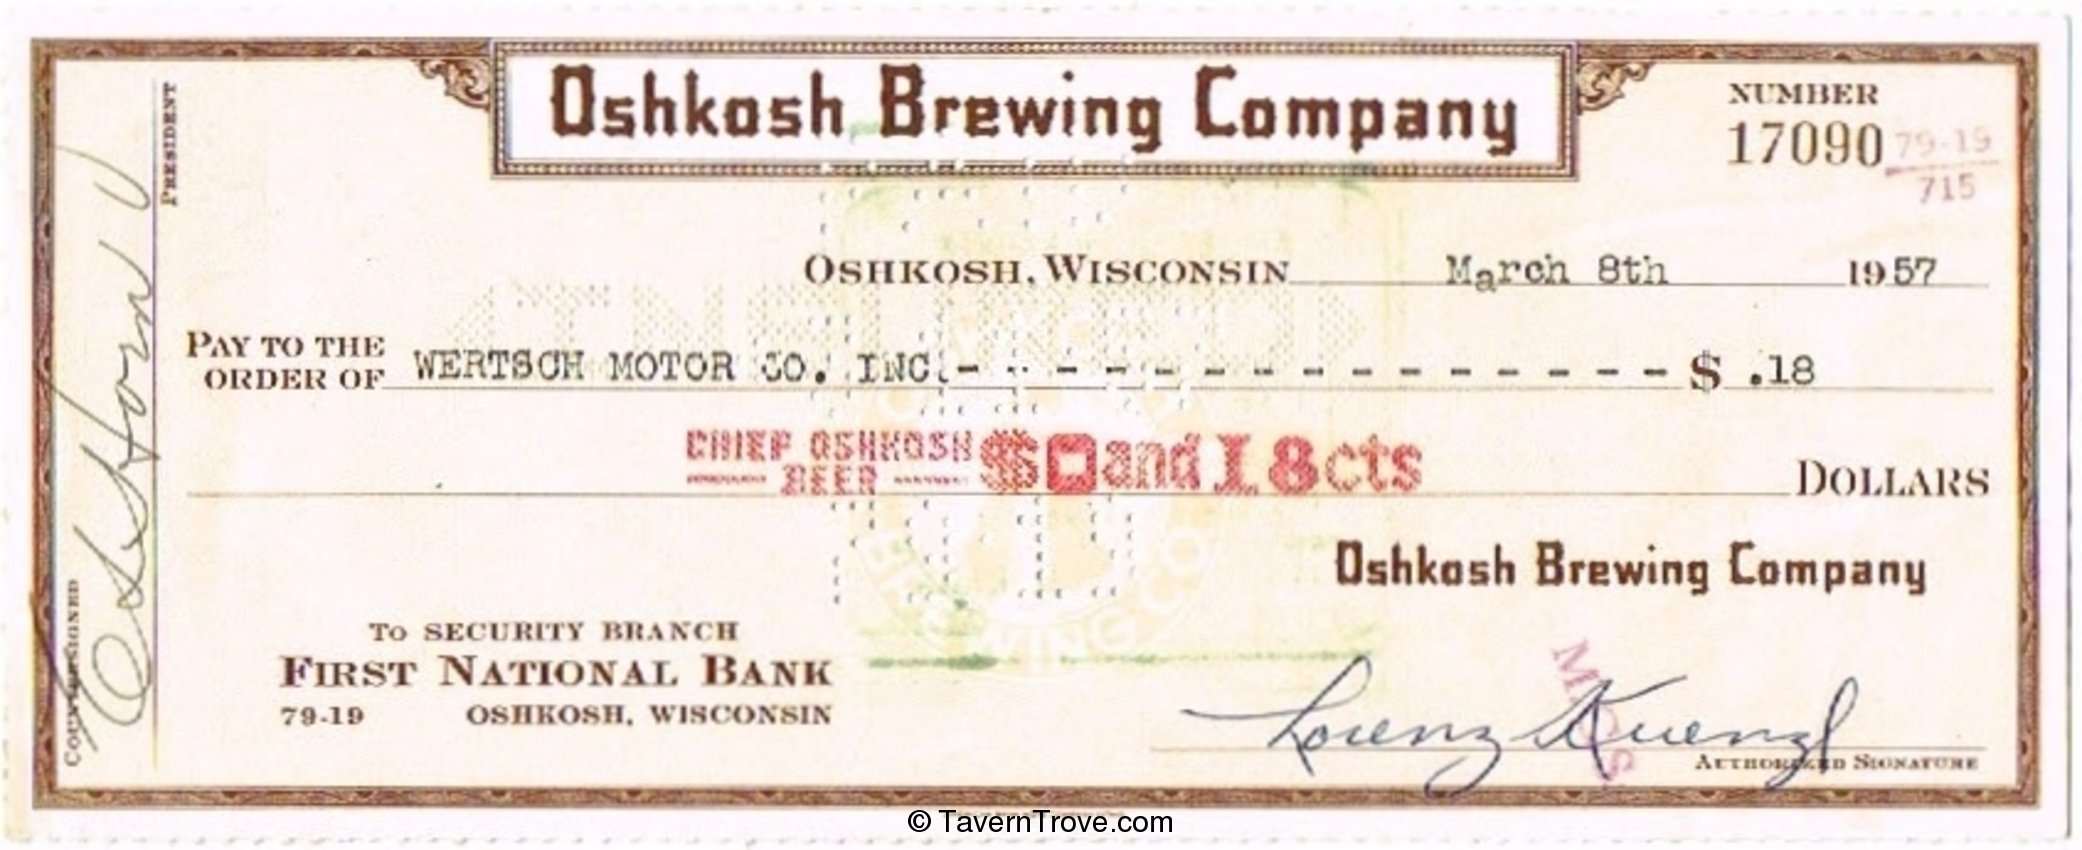 Oshkosh Brewing Co.